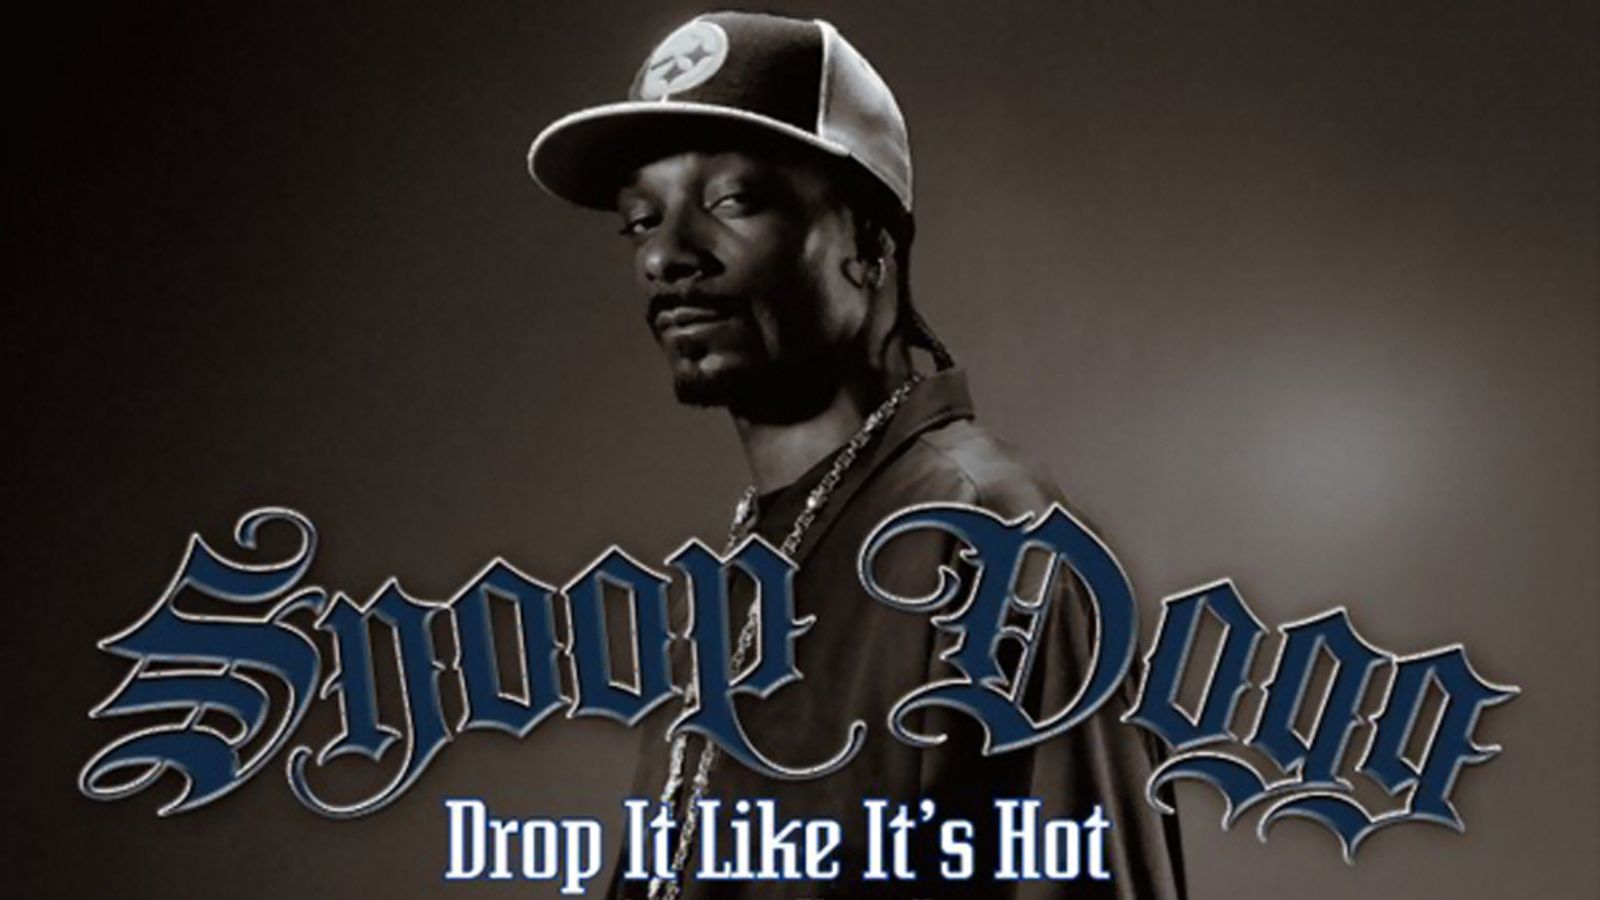 Snoop Dogg. Snoop Dogg Drop it like it's hot. Дроп ИТ лайк ИТС хот обложка снуп дог. Тупак и снуп дог фото на обои. Snoop dogg drop it like